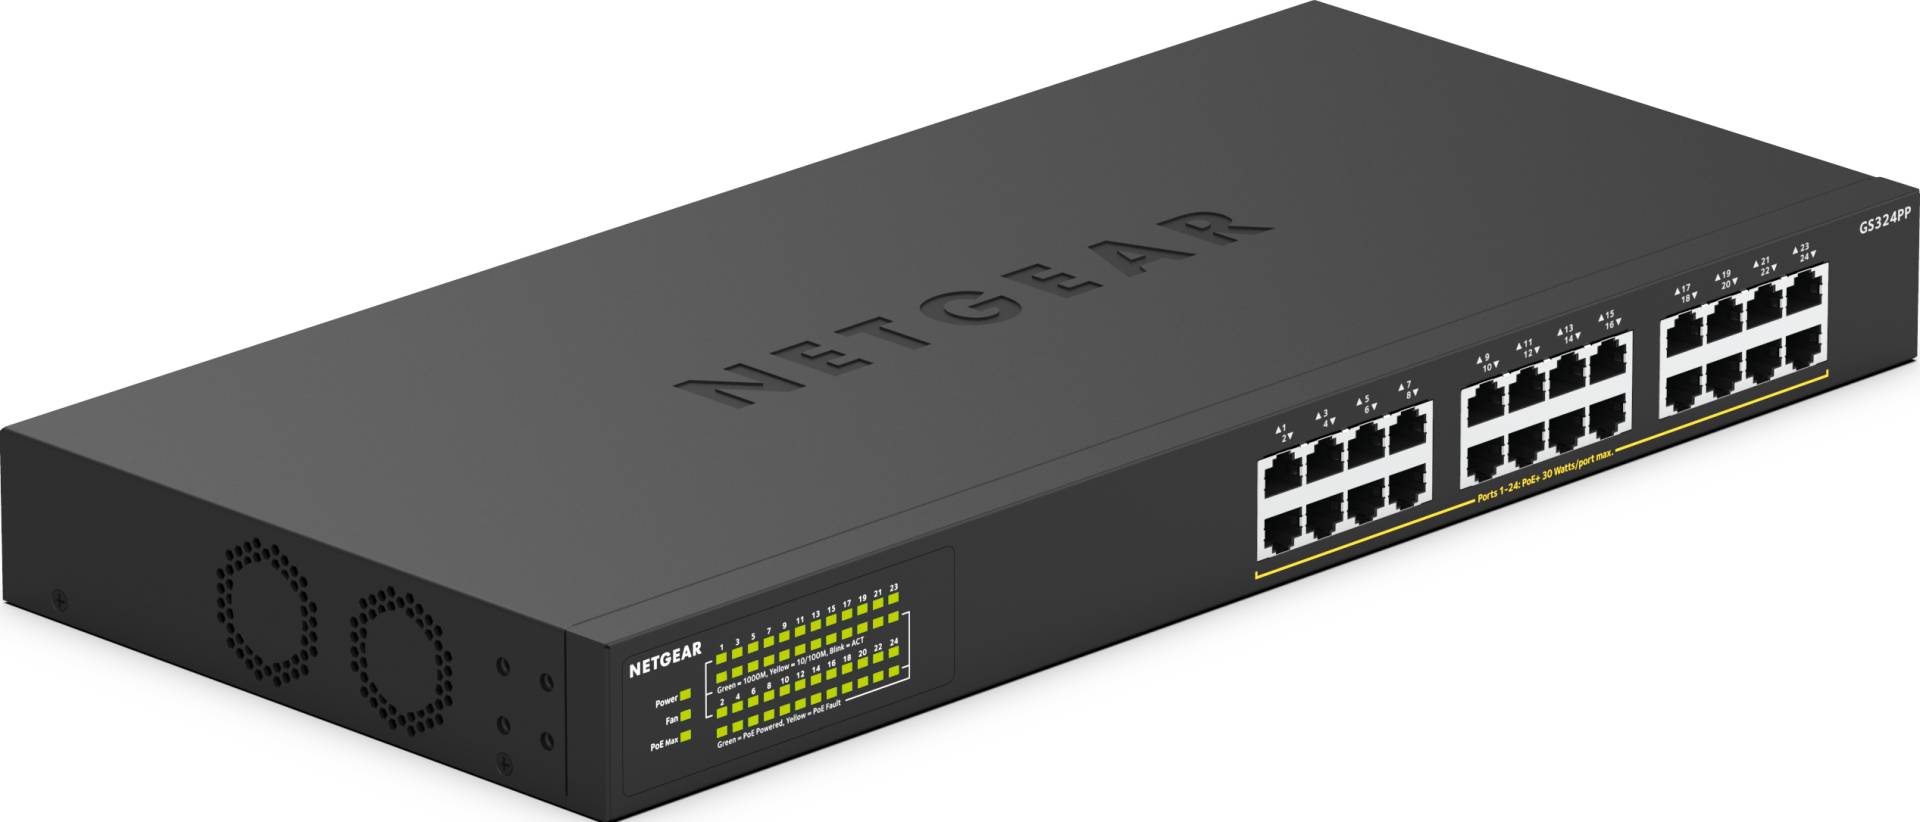 NETGEAR GS324PP - Switch, 24-Port, Gigabit Ethernet, PoE+ von Netgear